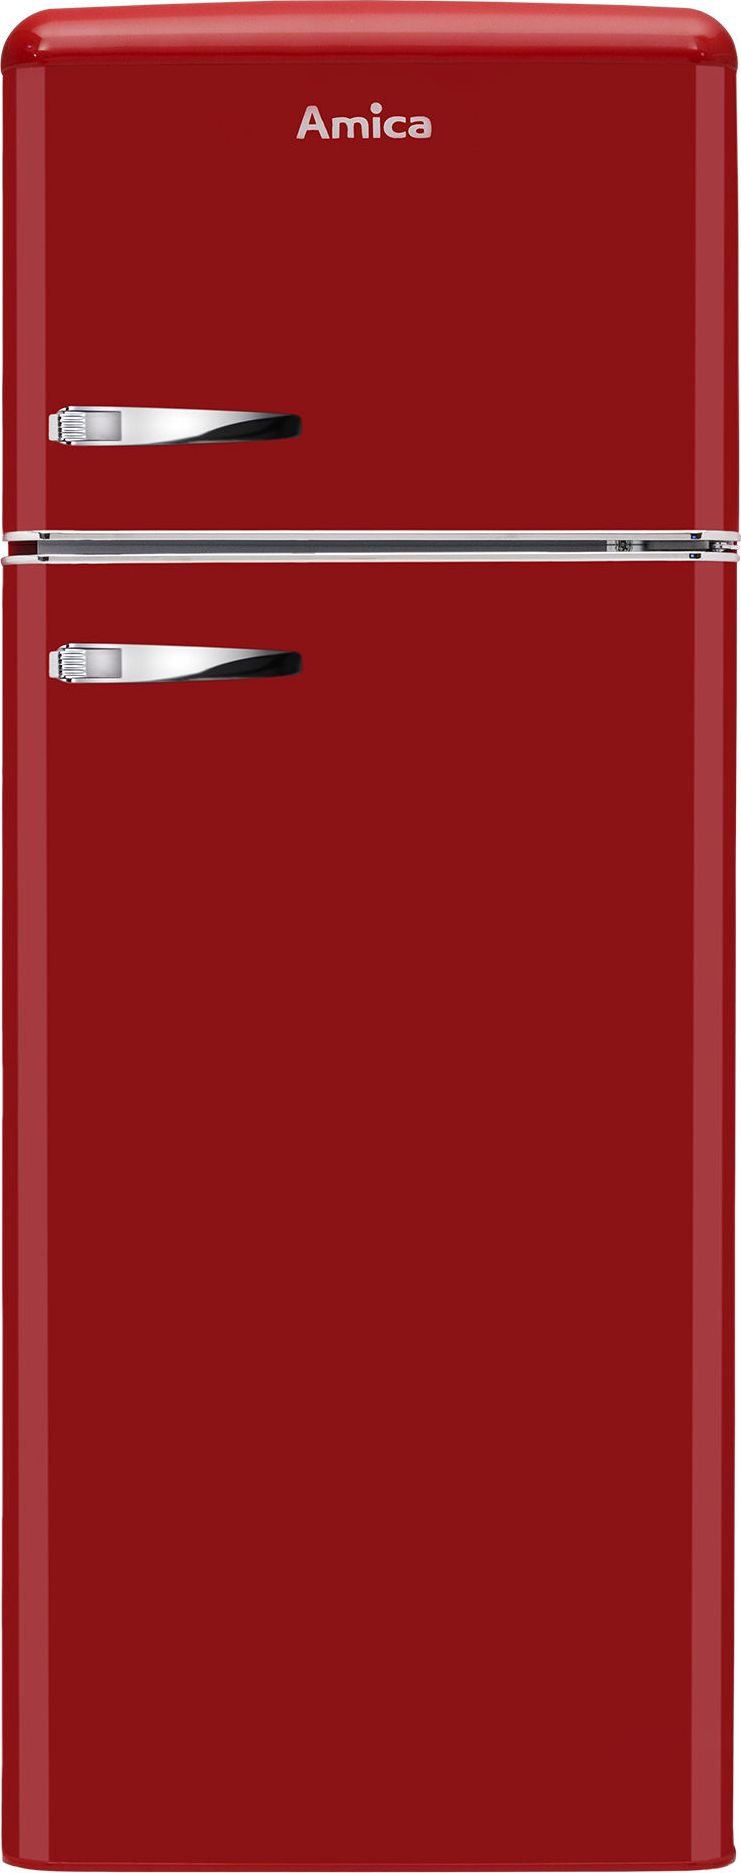 Combine frigorifice - Combina frigorifica  Amica KGC15630R,
roșu,4 rafturi,
Fara display,40 dB